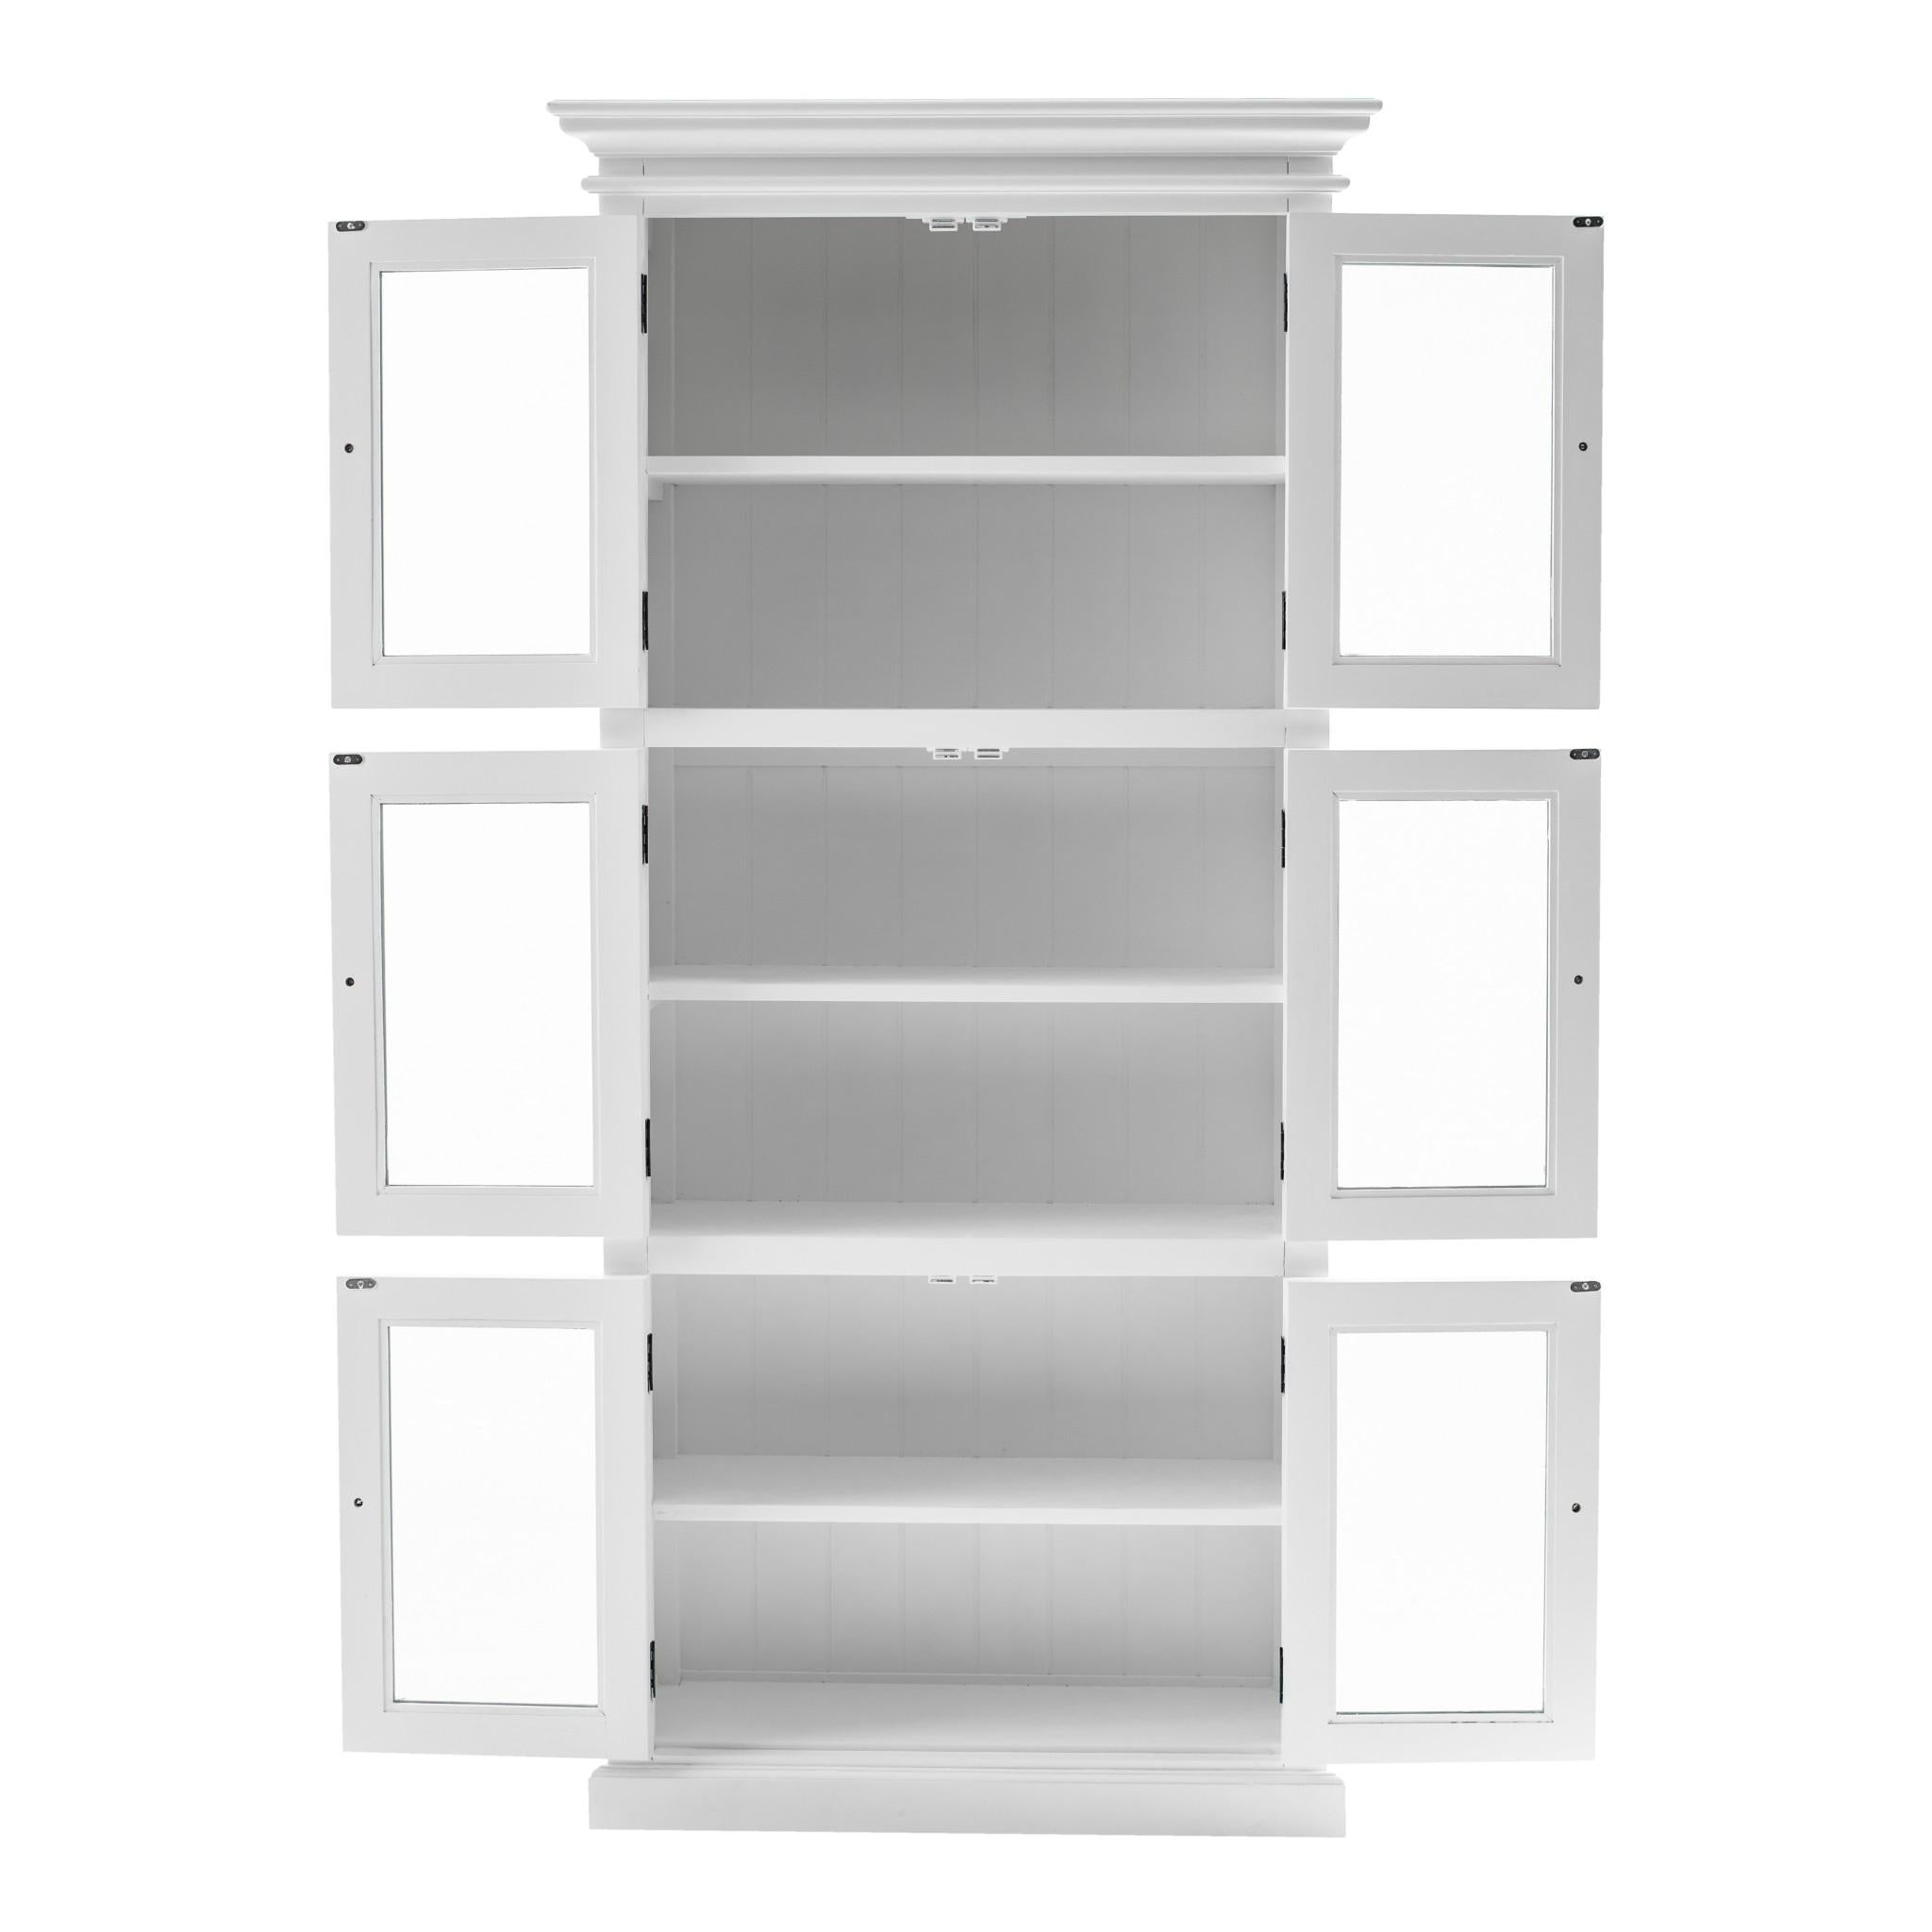 Classic White Three Level Storage Cabinet